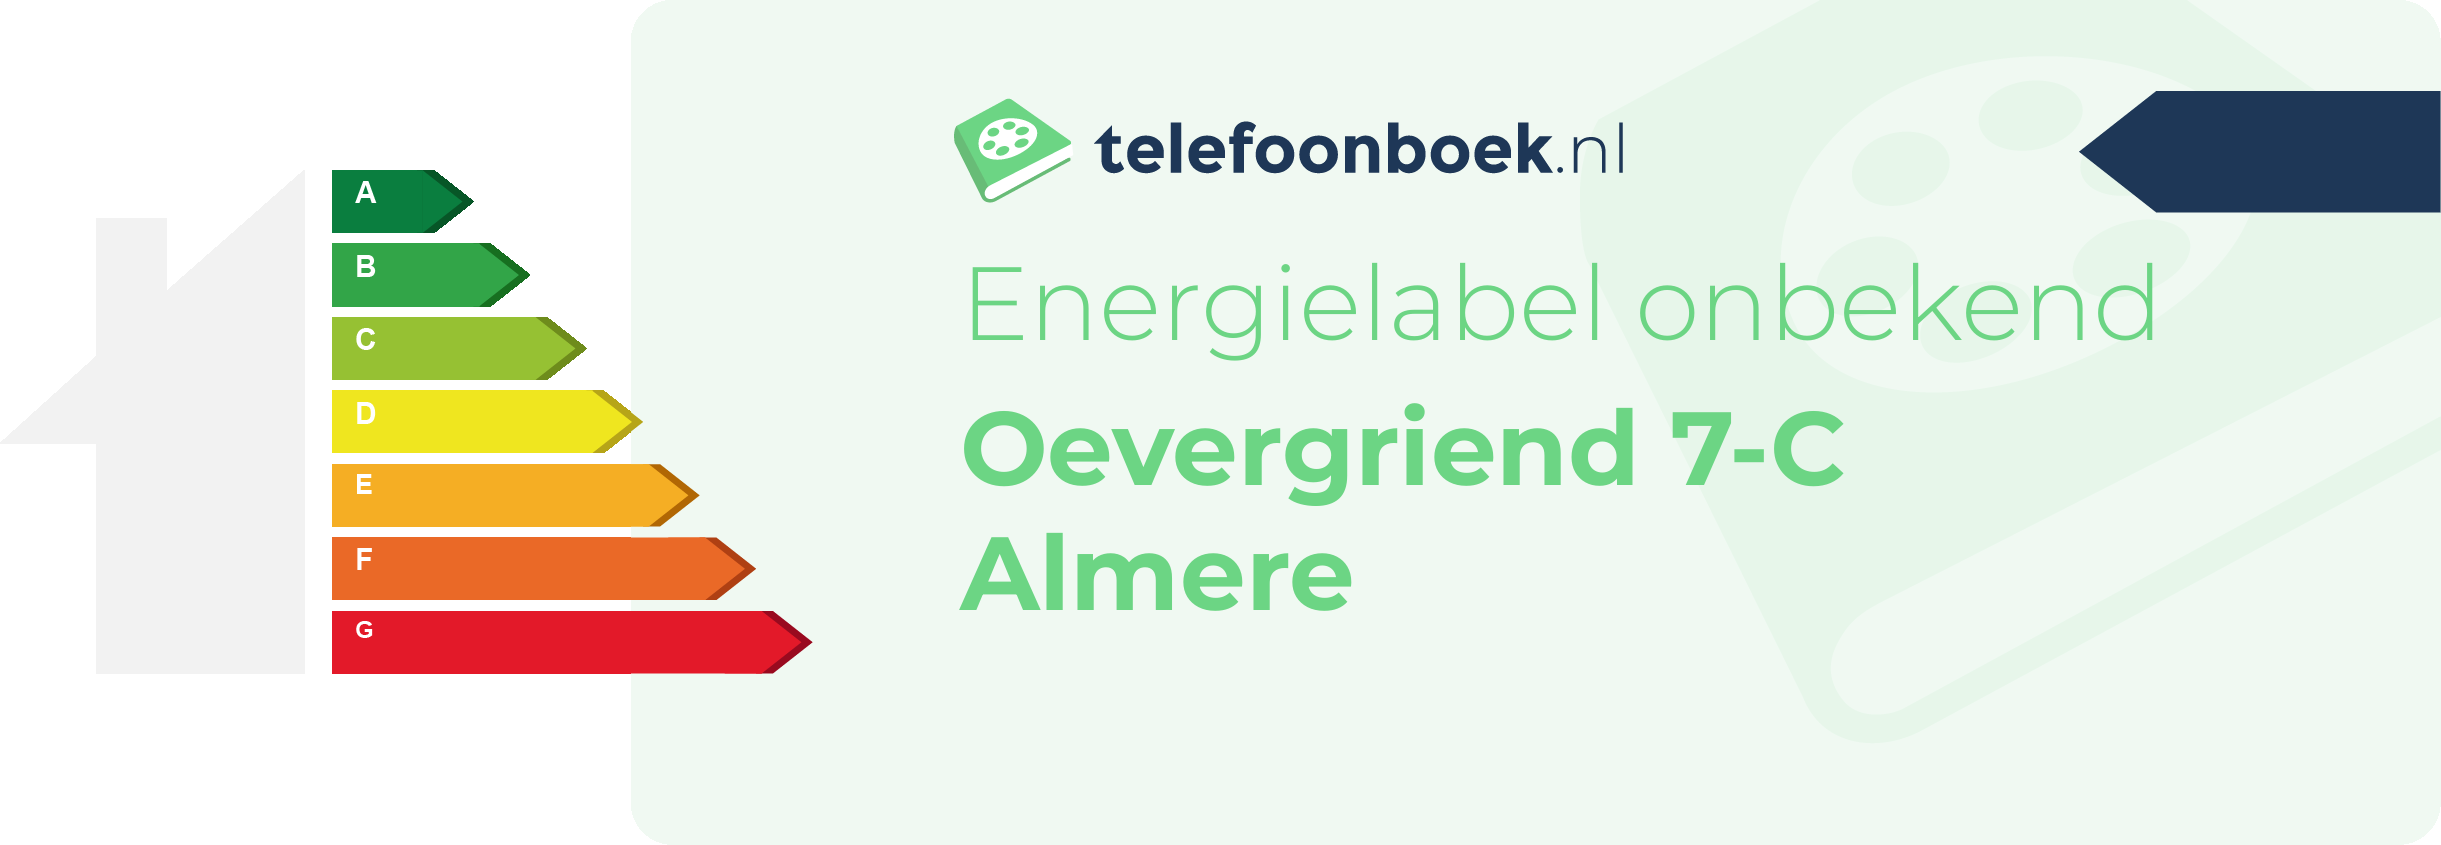 Energielabel Oevergriend 7-C Almere